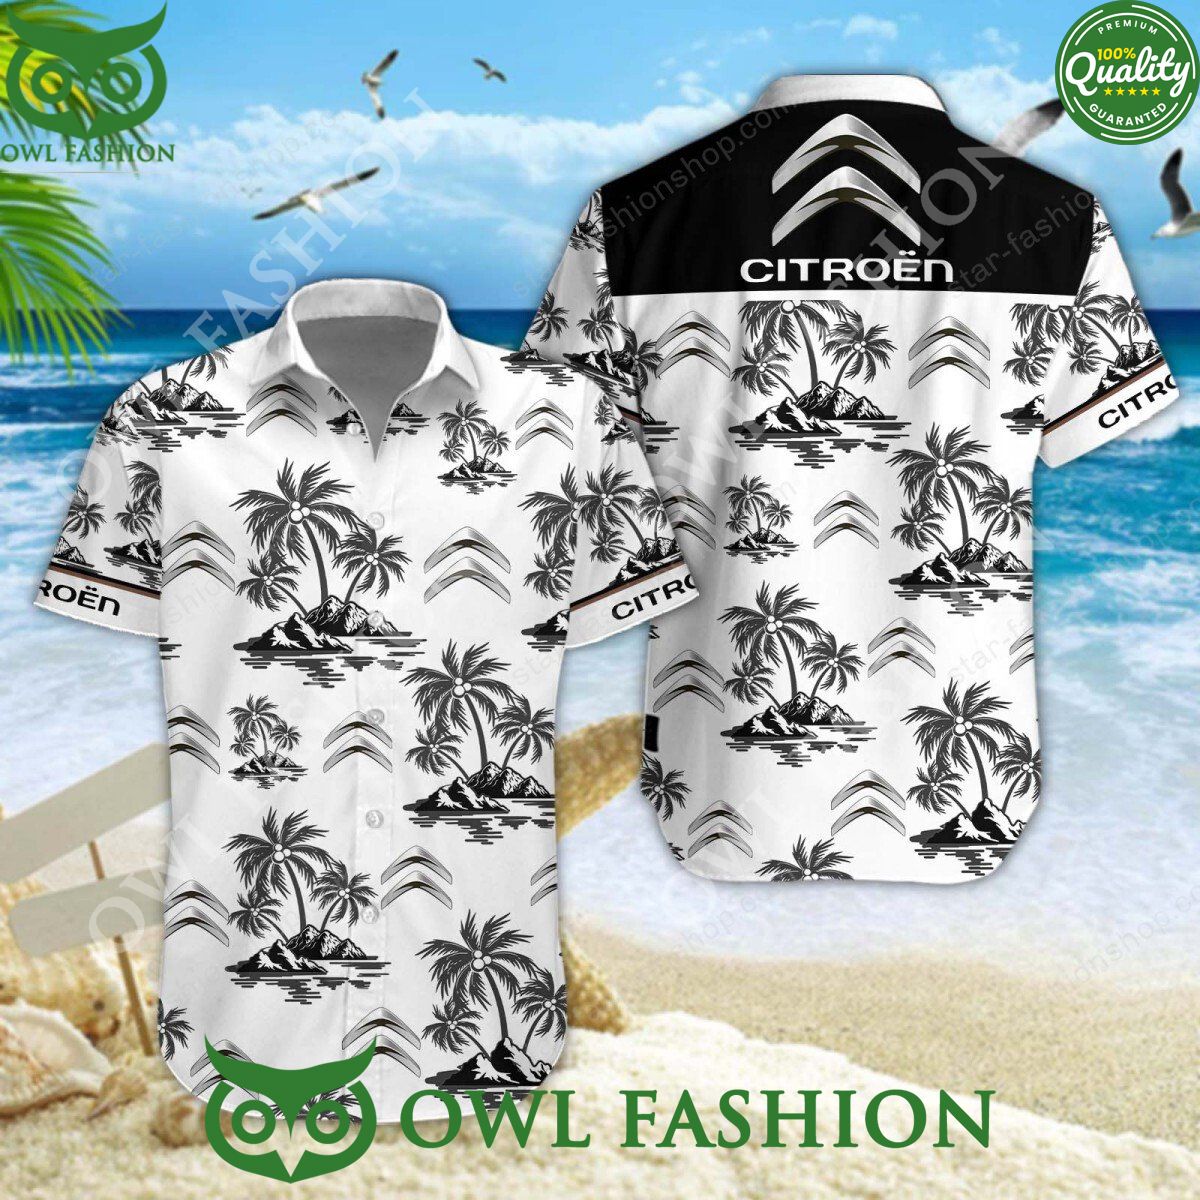 citroen french automobile brand hawaiian shirt and short 1 3xVaU.jpg